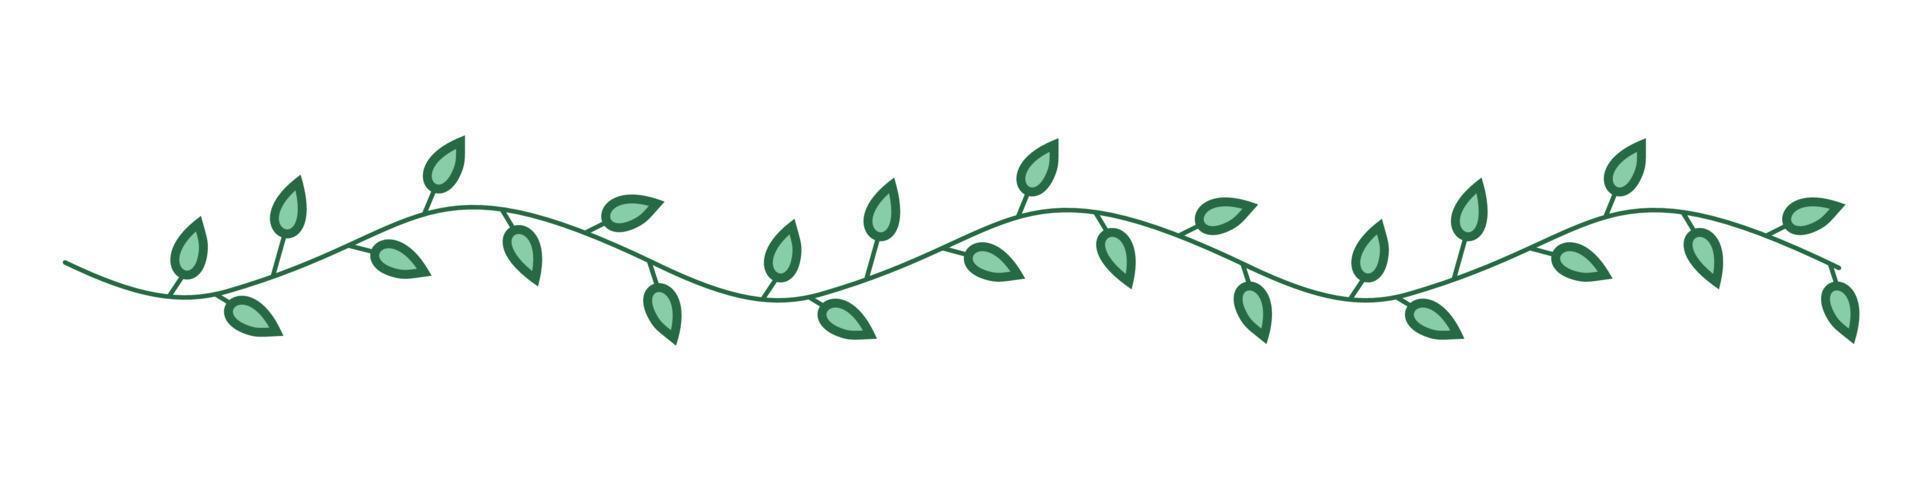 ramita con hojas curvas onduladas vector